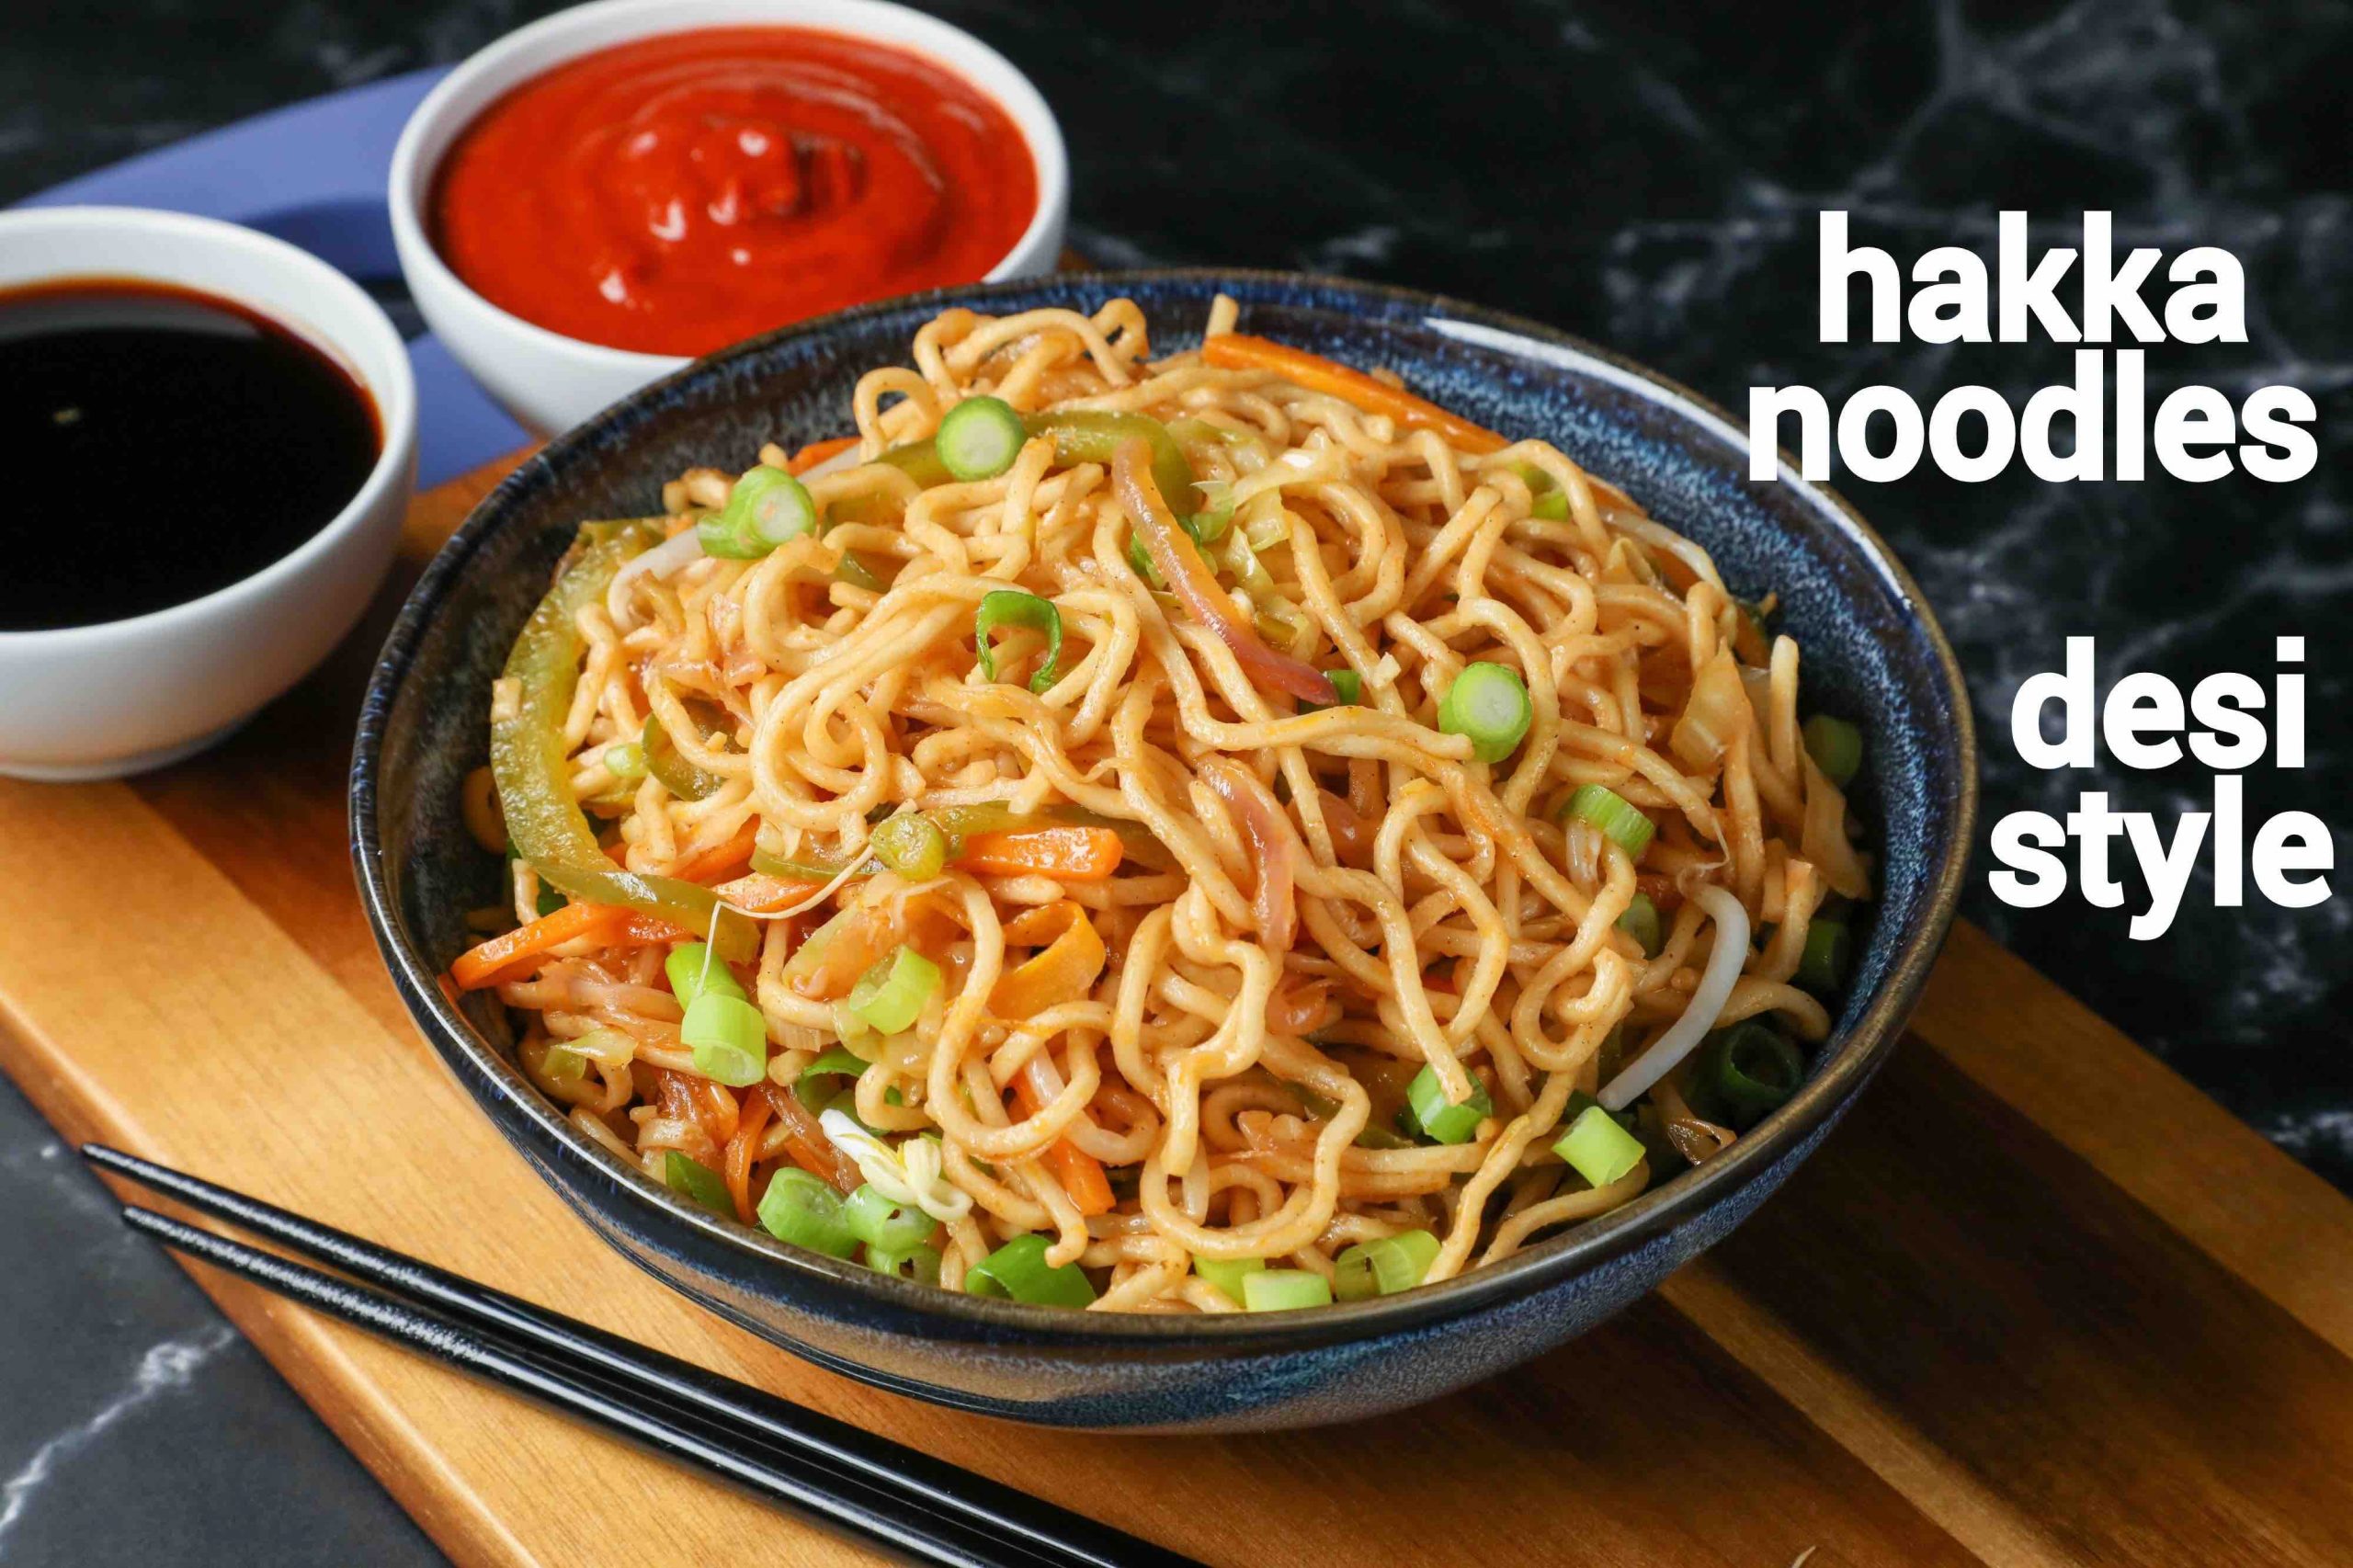 https://hebbarskitchen.com/wp-content/uploads/2020/10/hakka-noodles-recipe-veg-hakka-noodles-recipe-vegetable-noodles-hakka-1-scaled.jpeg